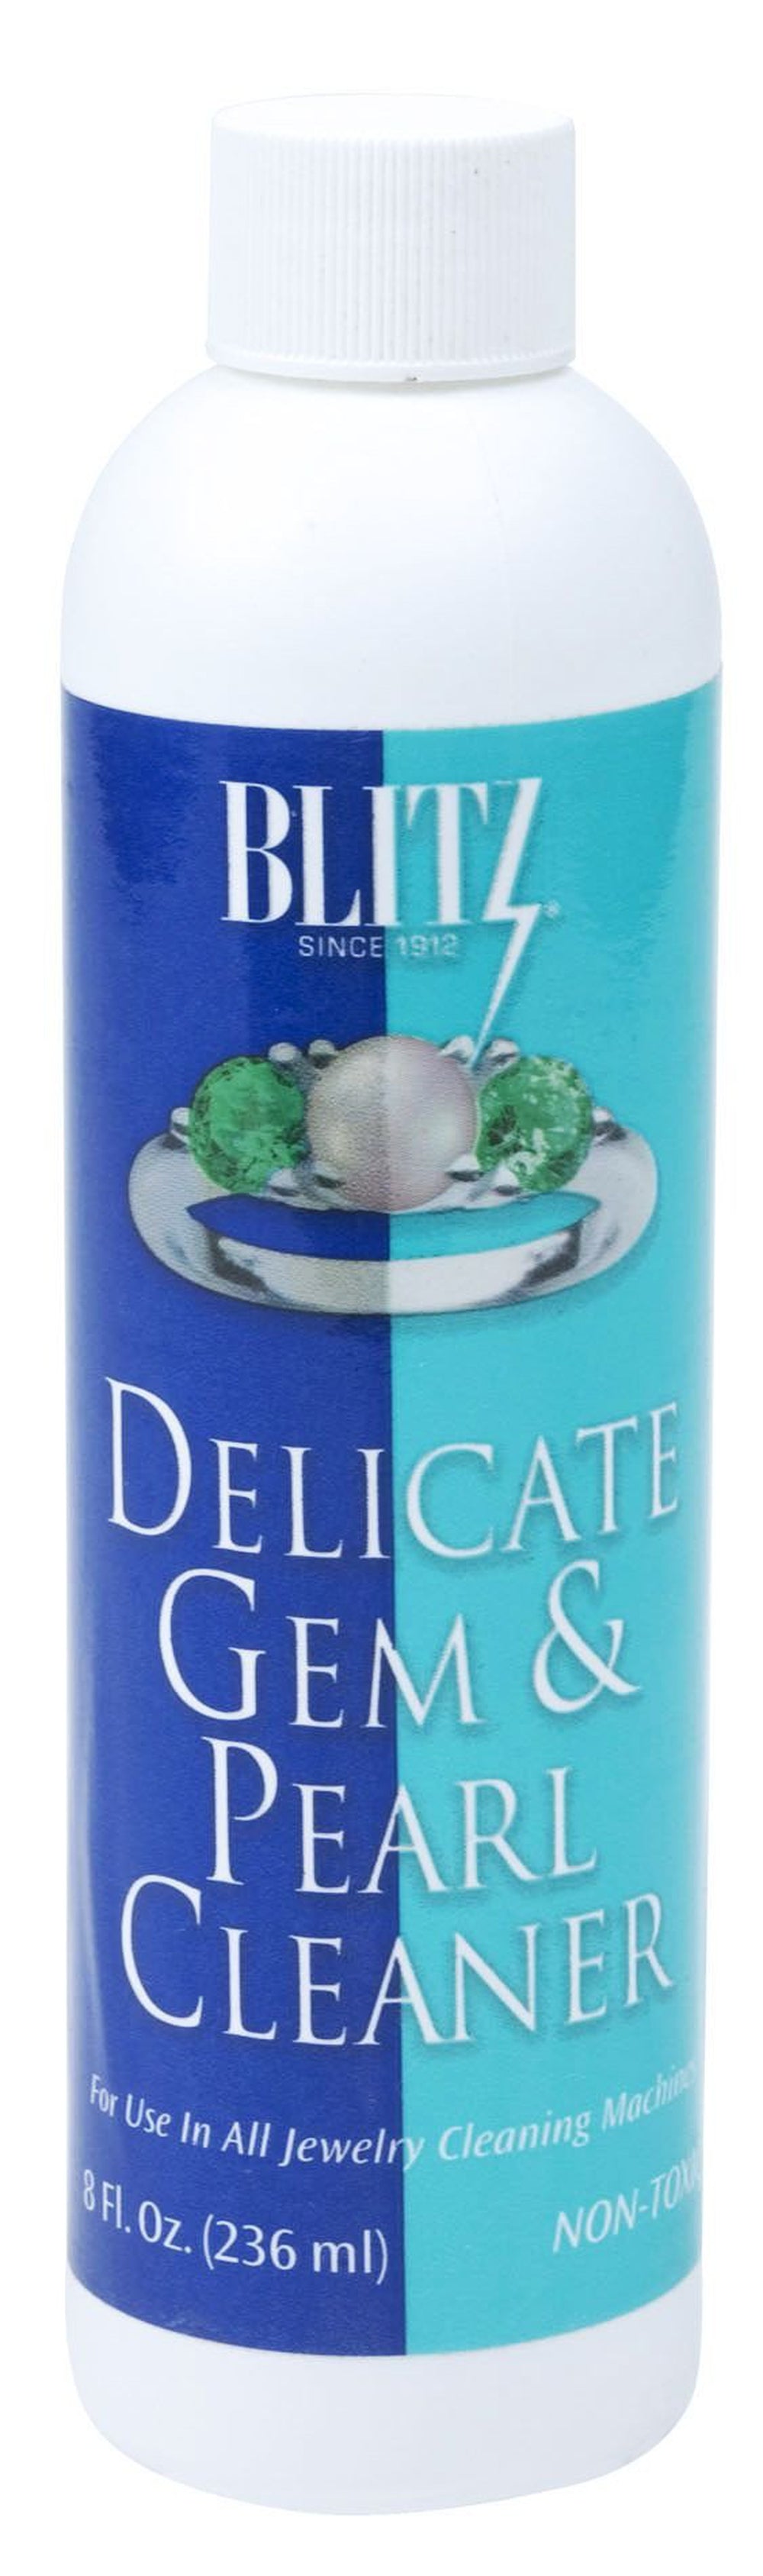 Blitz Delicate Gem & Pearl Cleaner